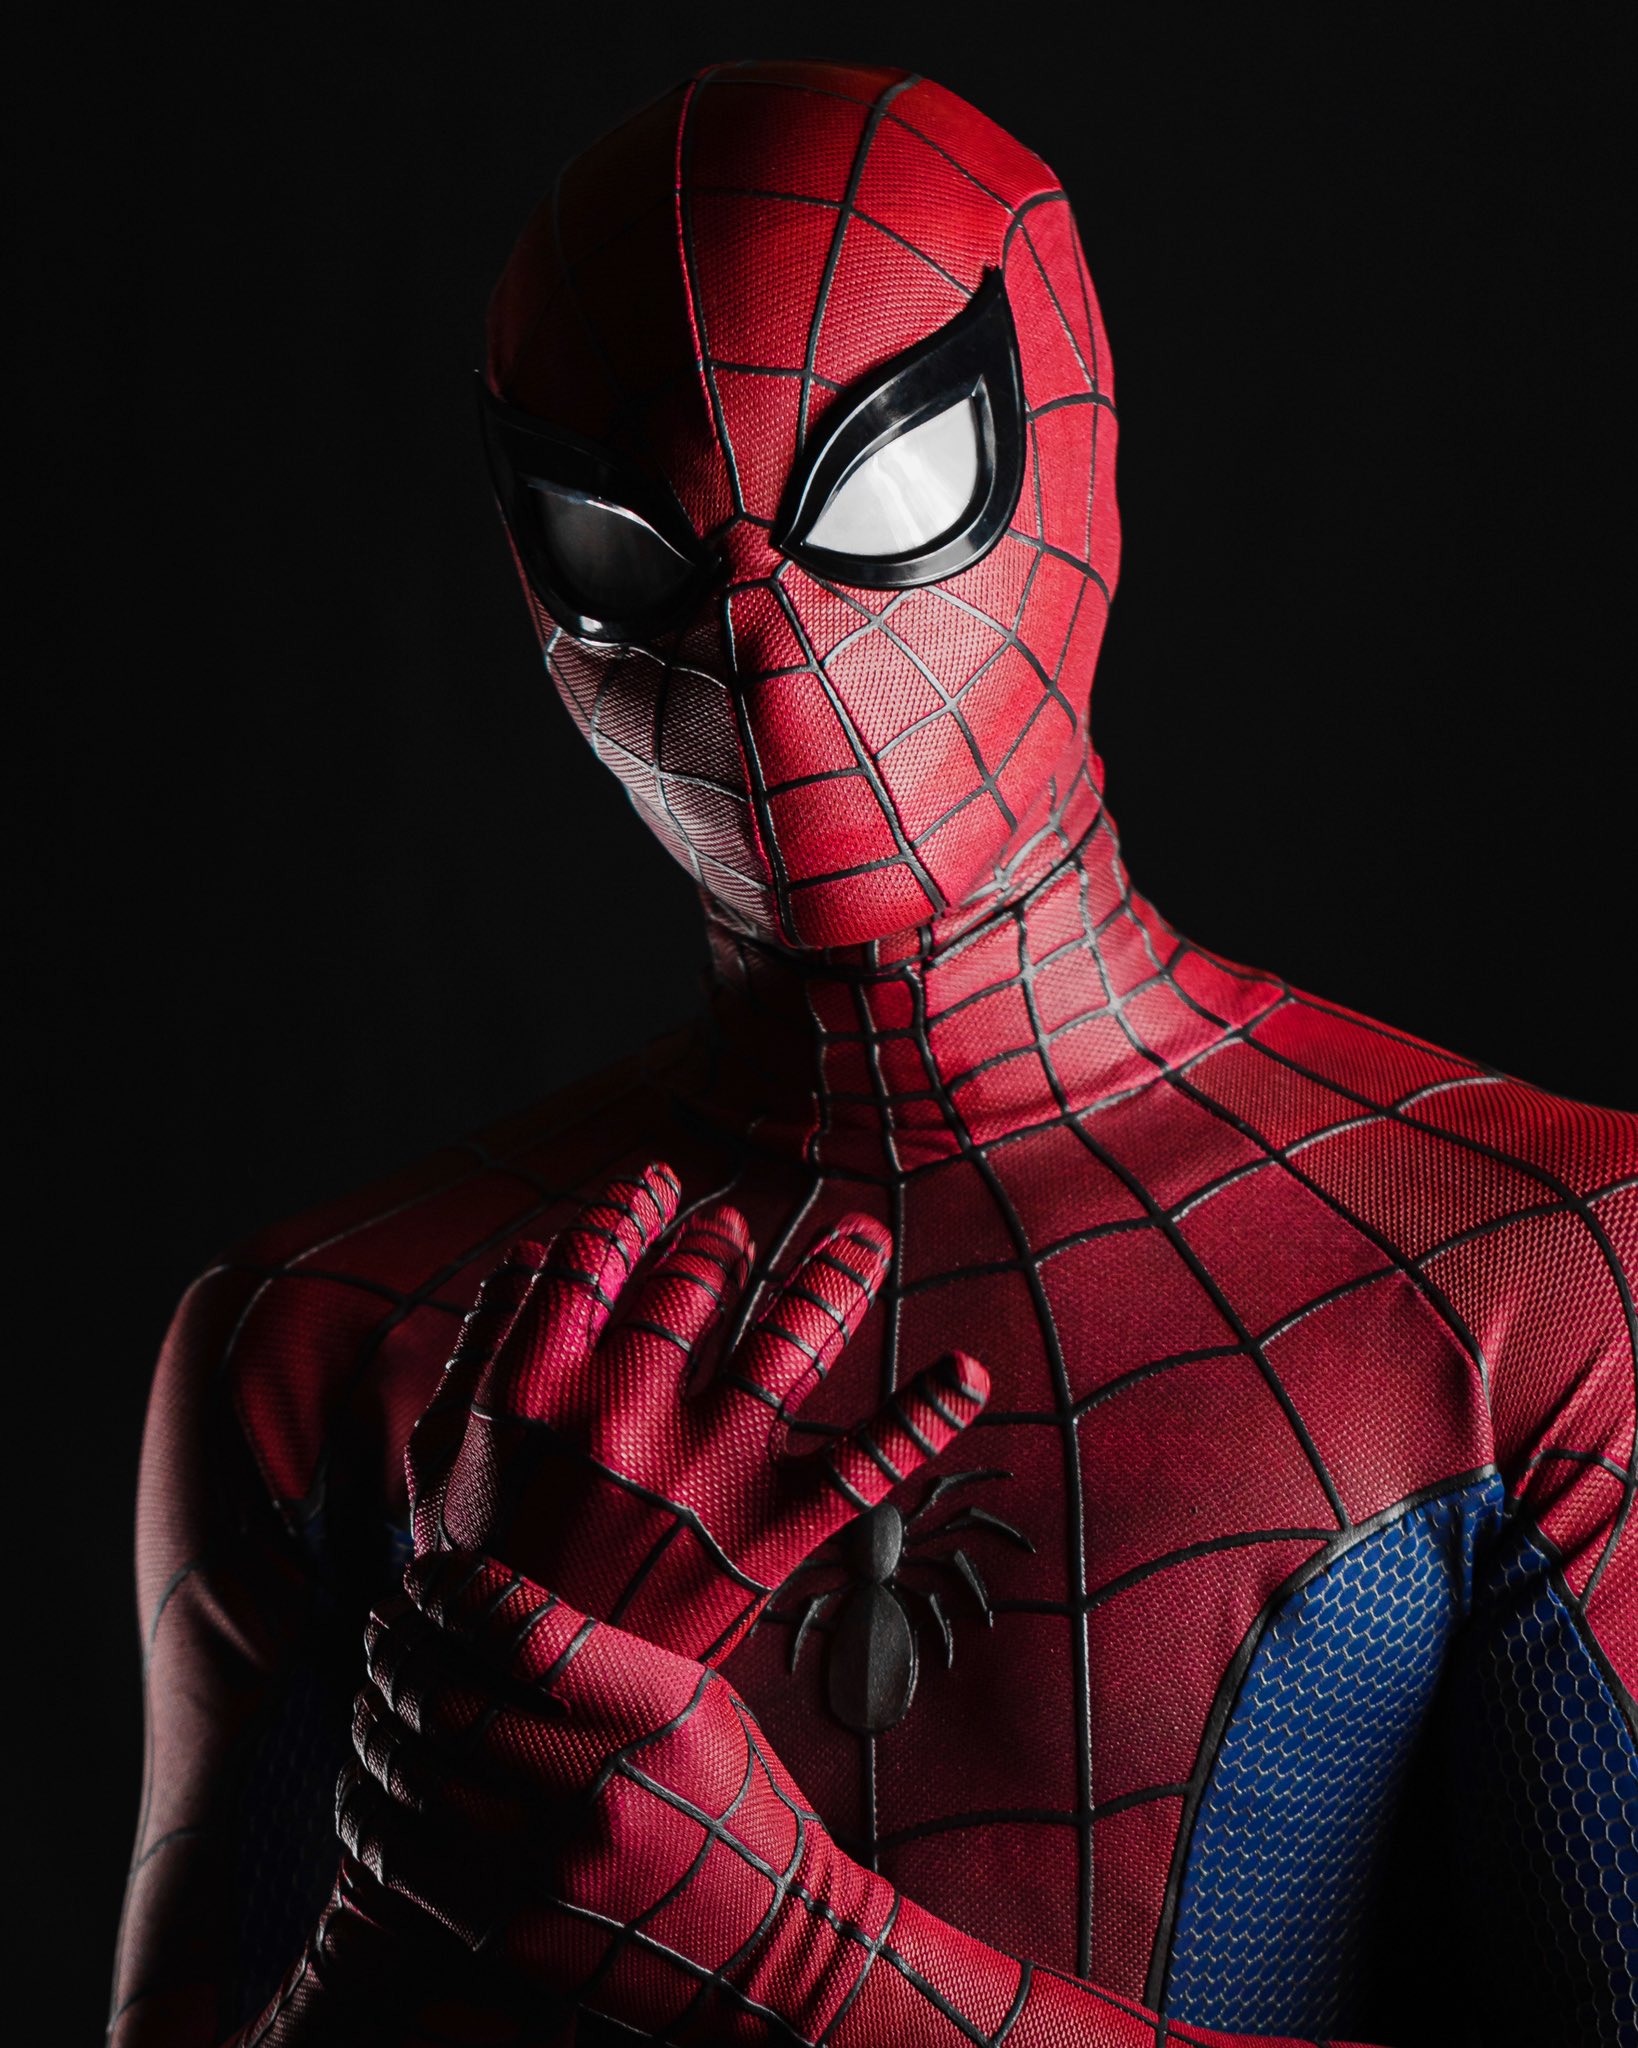 K-ON Yui Hirasawa as Spider-Man at Marvel's Spider-Man Remastered